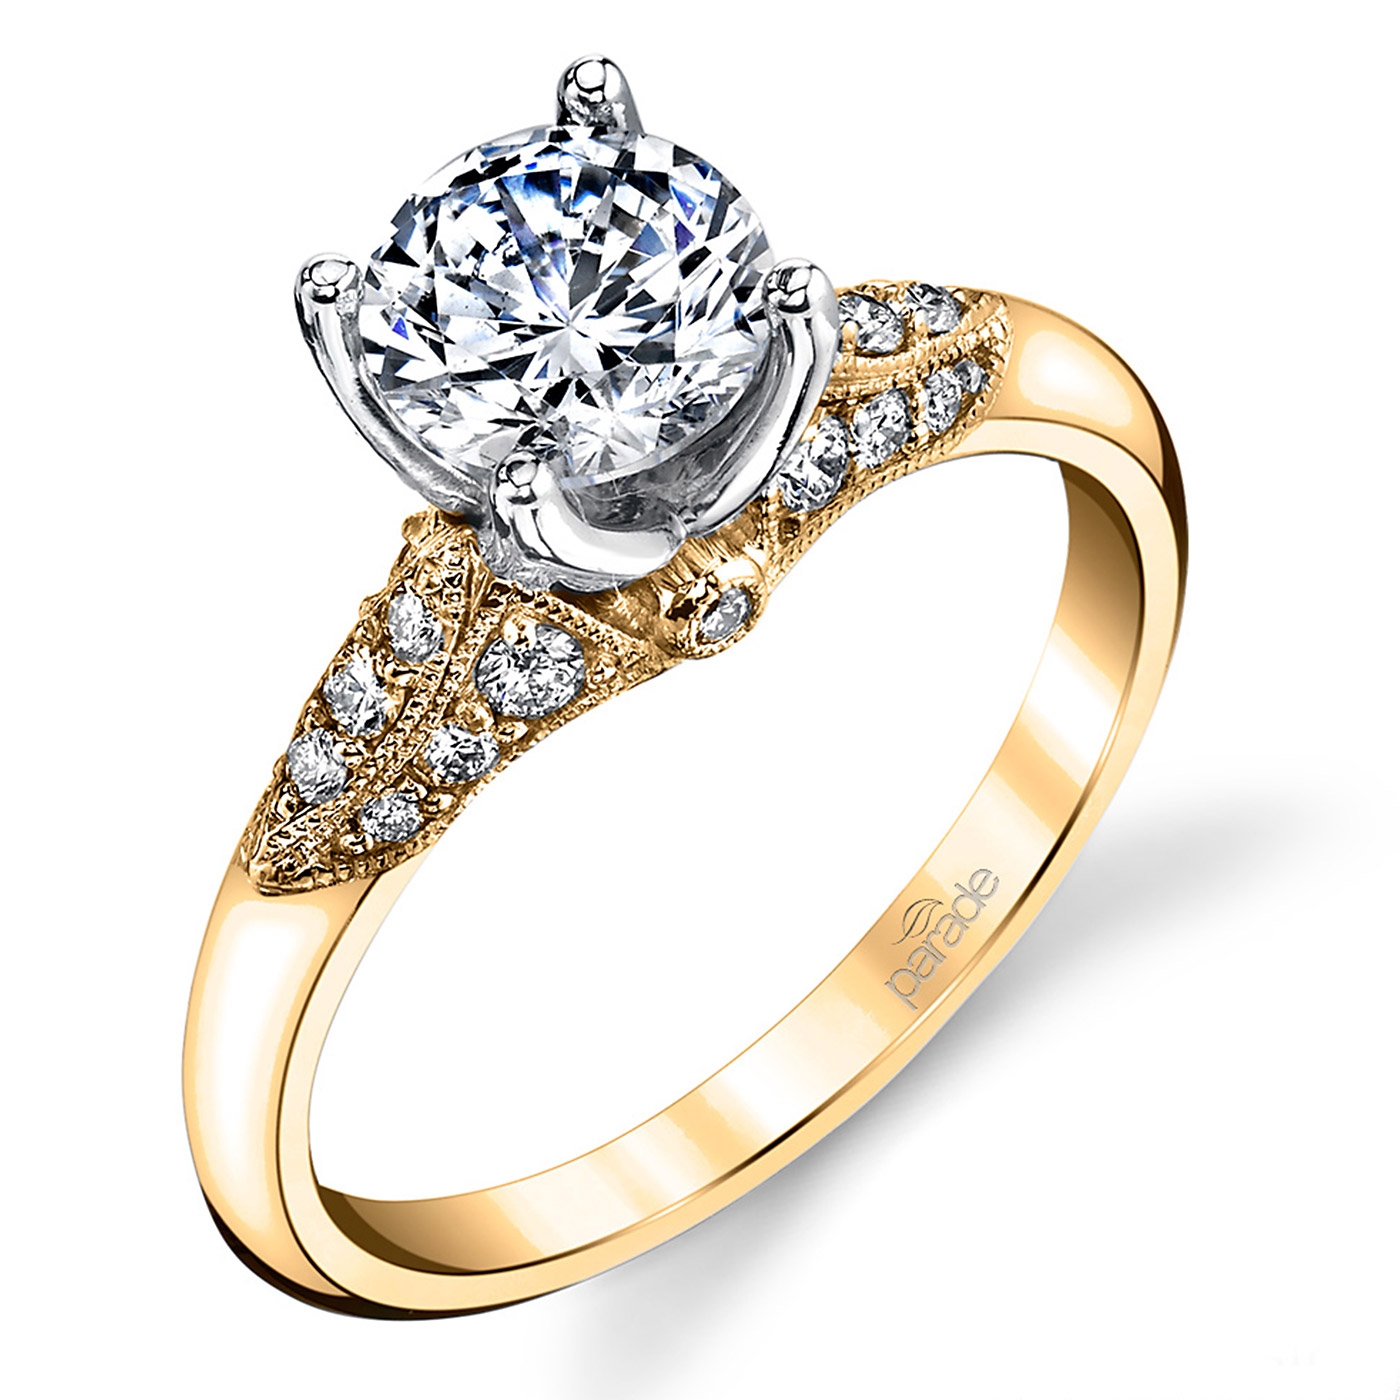 Parade Hera Bridal 14 Karat Diamond Engagement Ring R3942 Alternative View 3